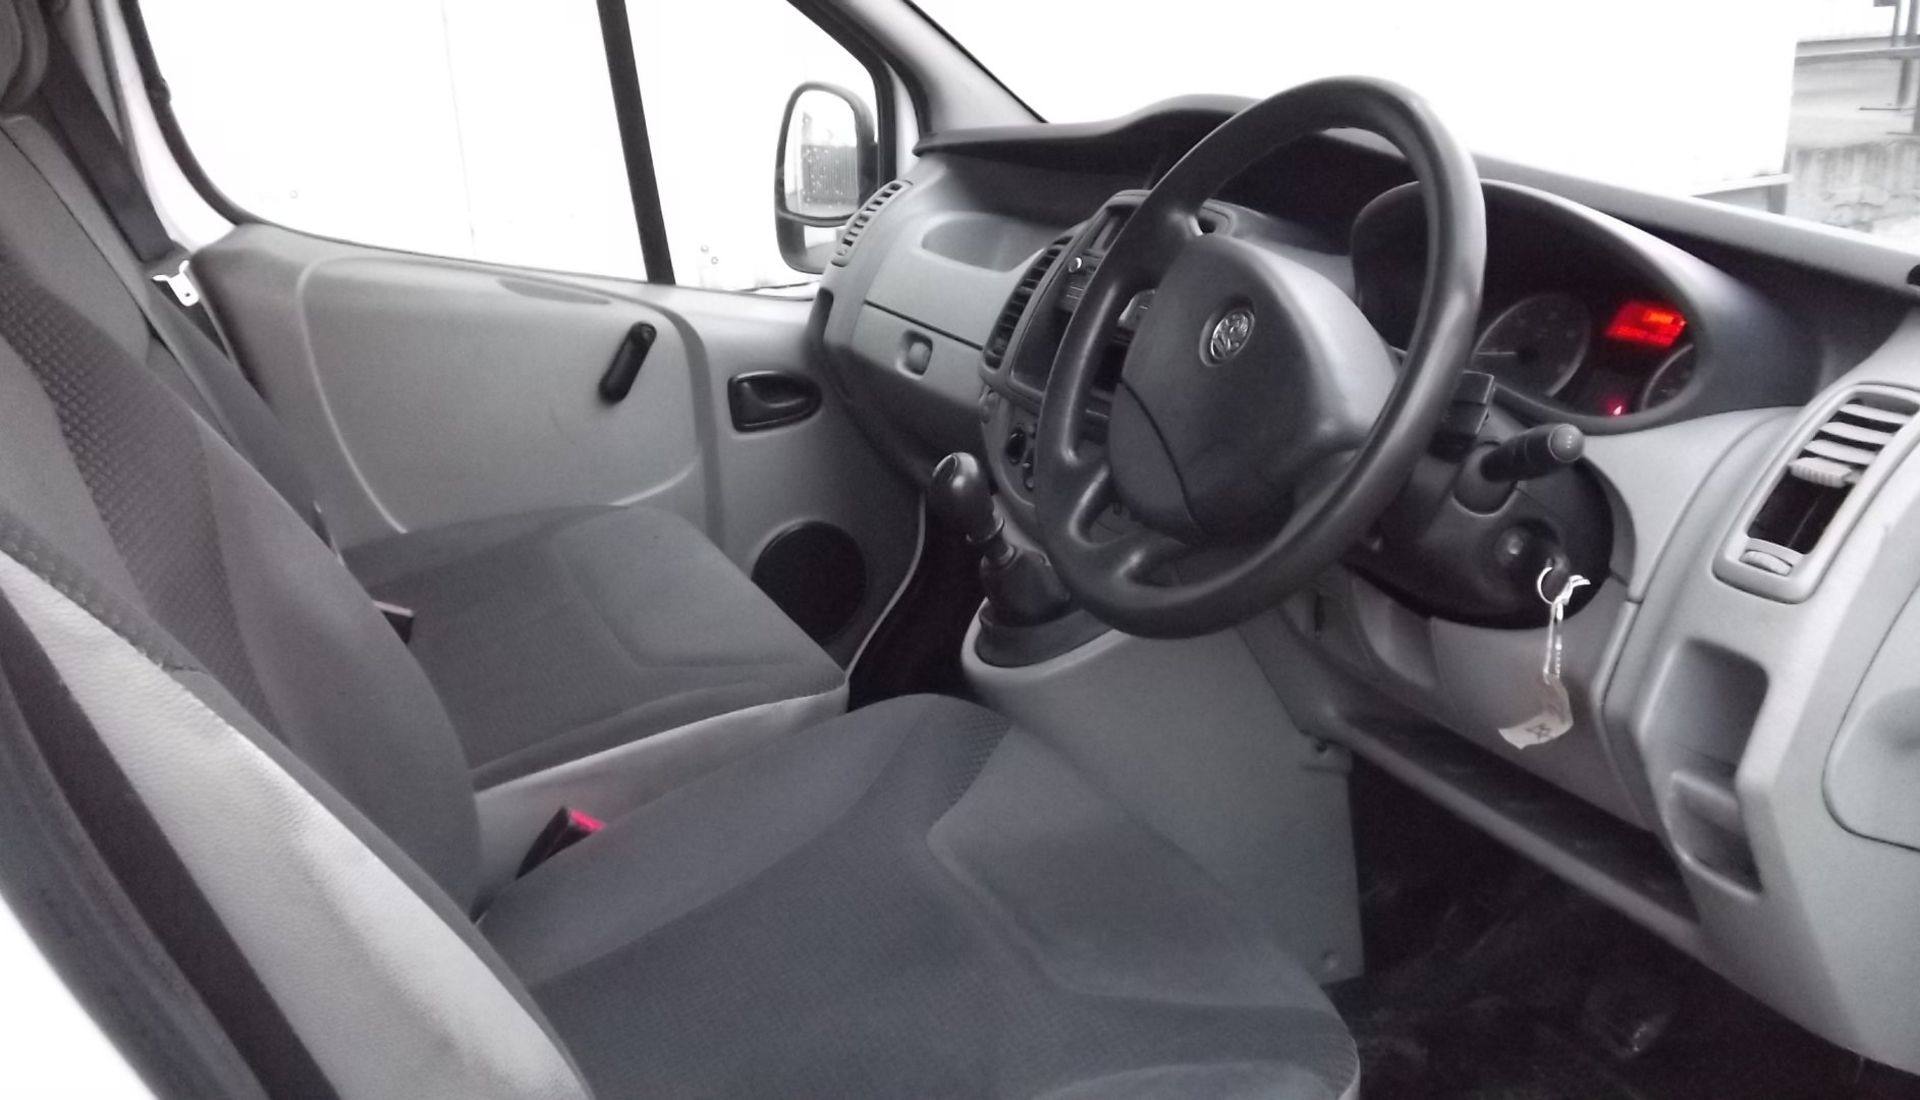 2014 Vauxhall Vivaro 2900 Cdti Lwb high roof panel van 5Dr - Image 10 of 12